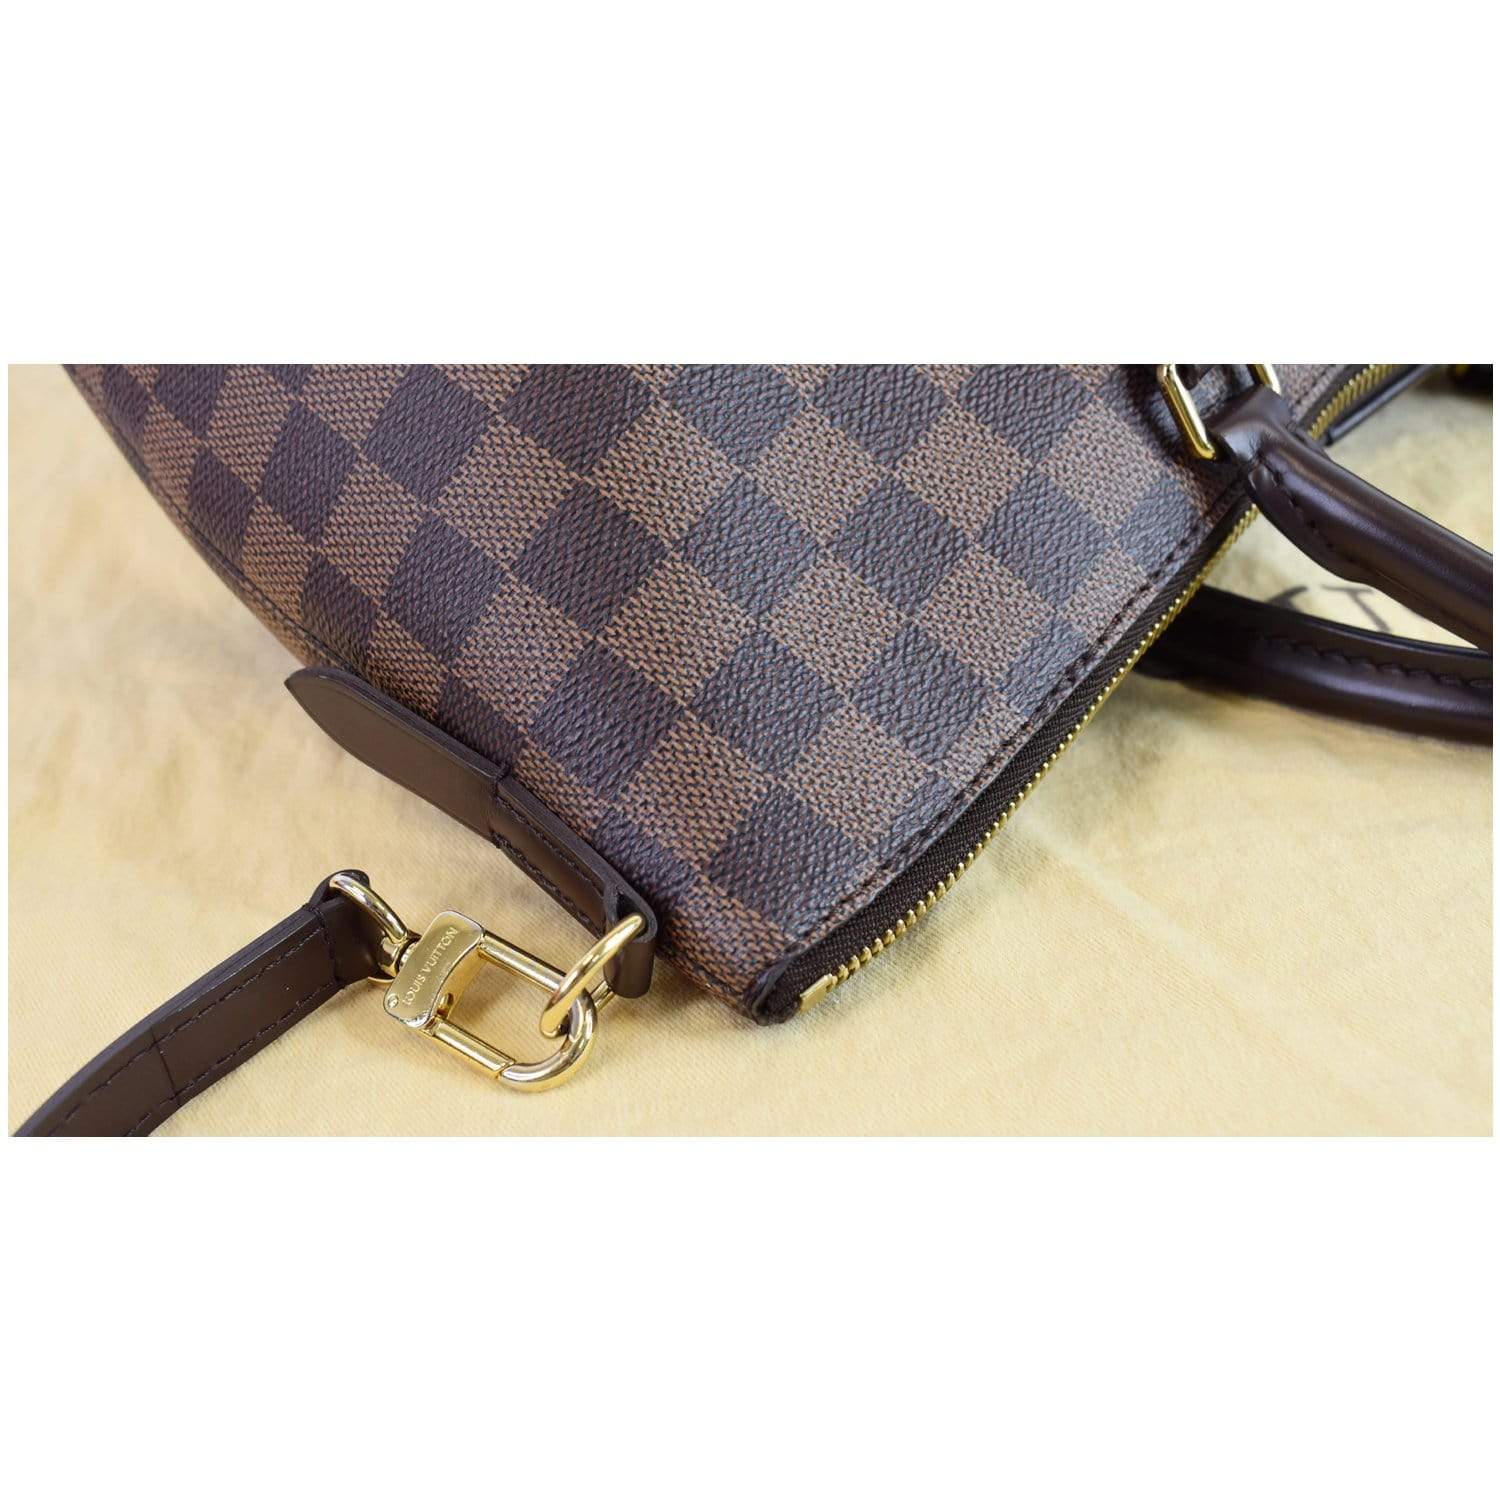 Louis Vuitton Shoulder Bag Siena MM Damier Ebene Canvas Shoulder